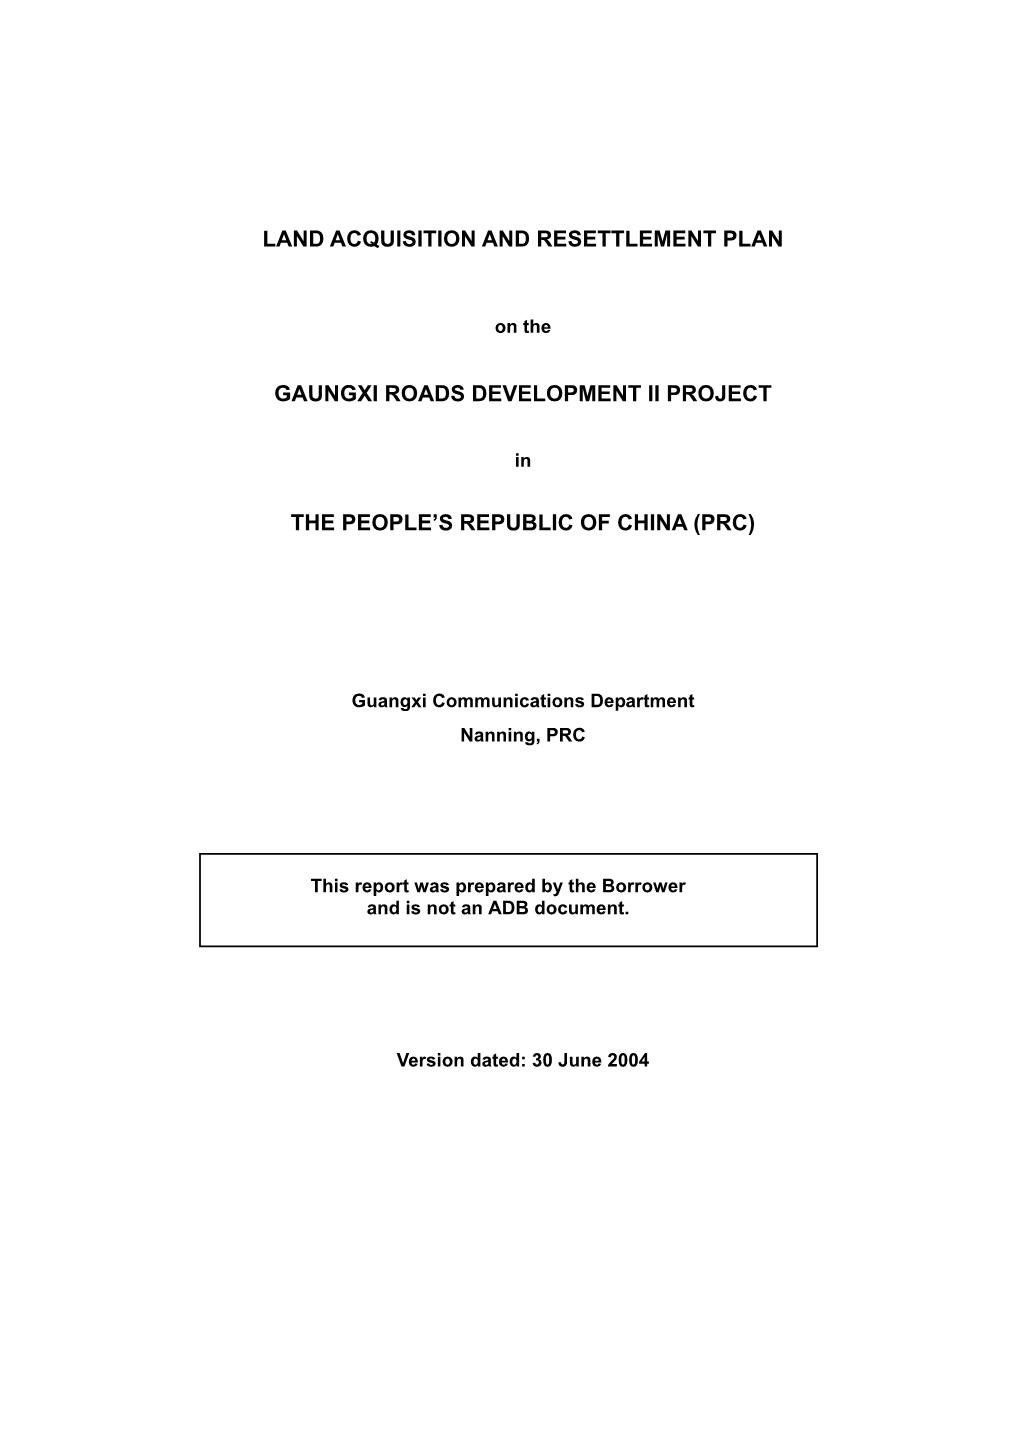 Land Acquisition and Resettlement Plan Gaungxi